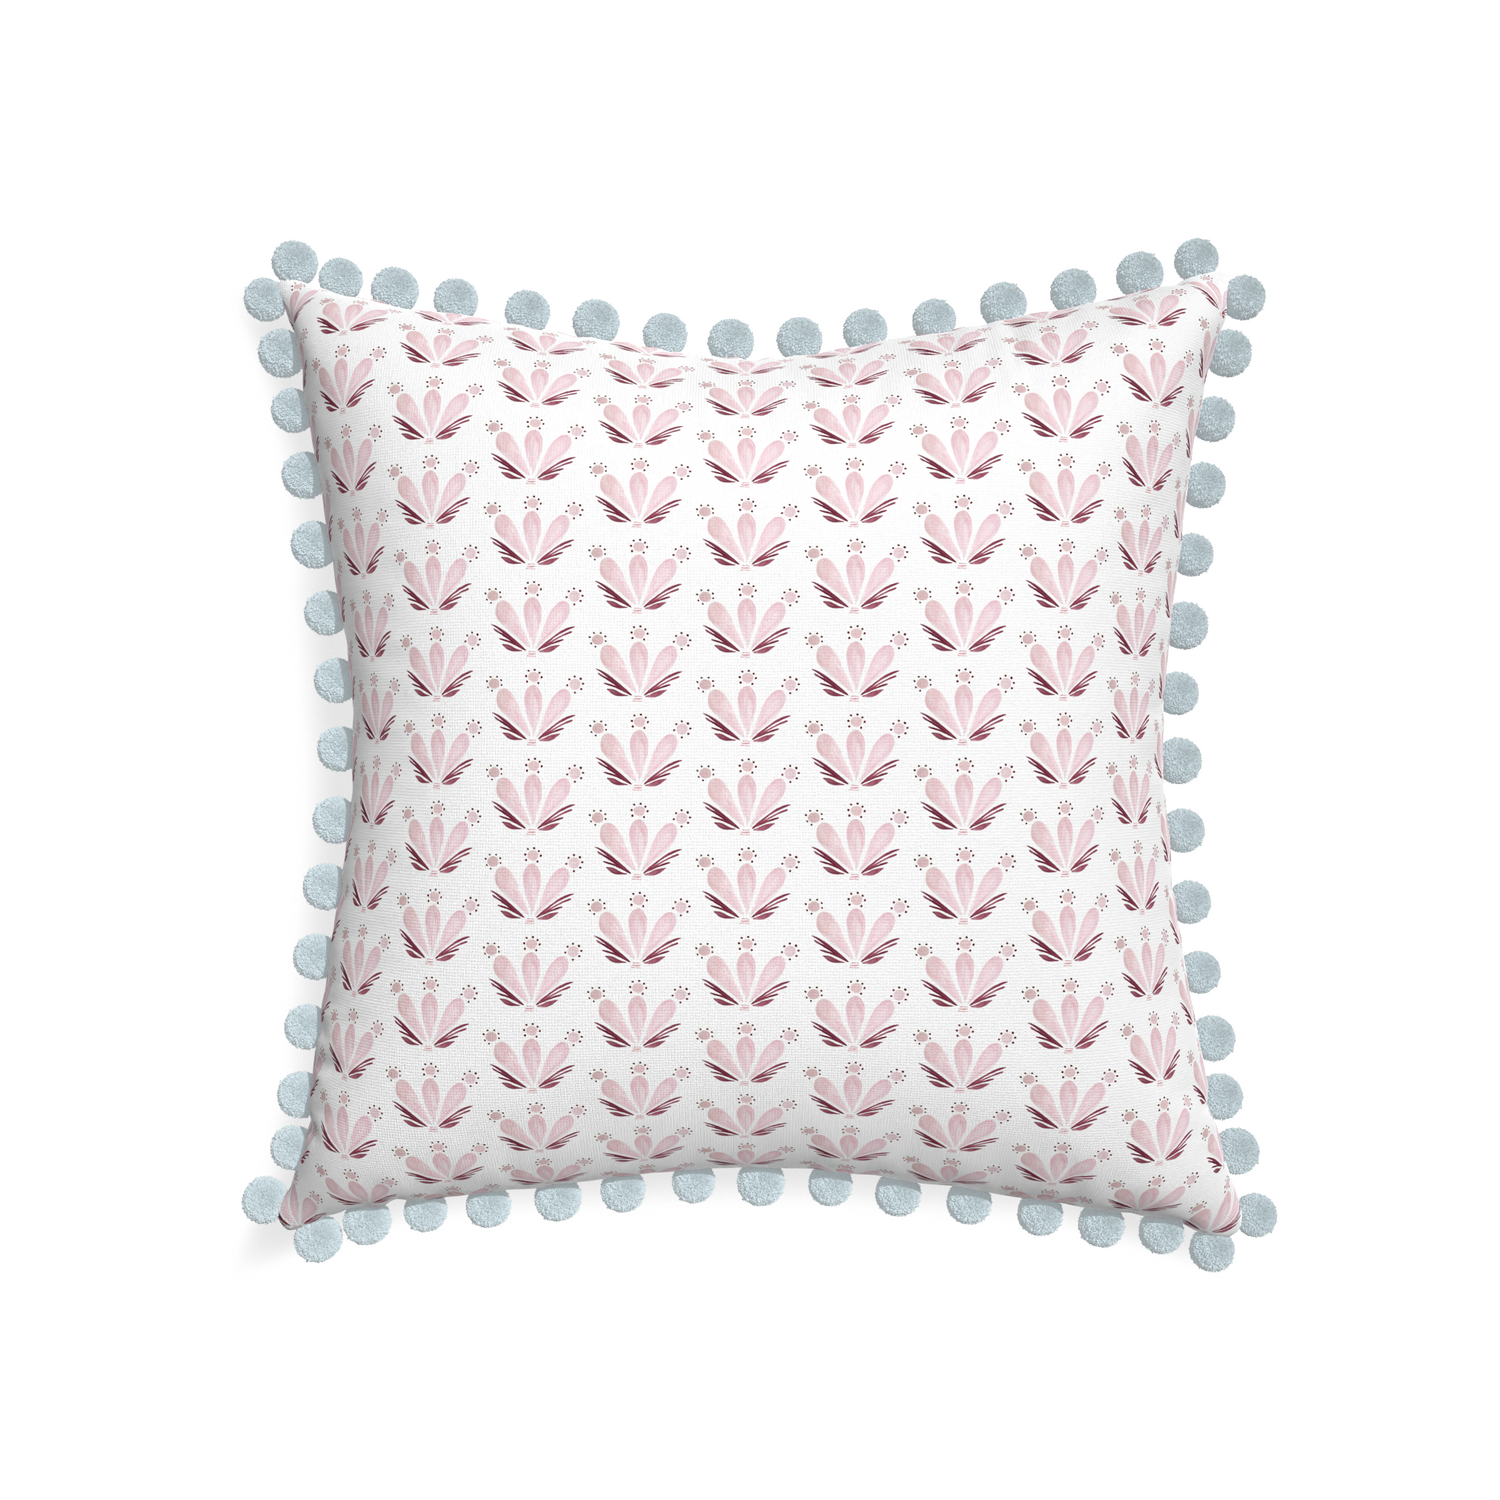 22-square serena pink custom pillow with powder pom pom on white background